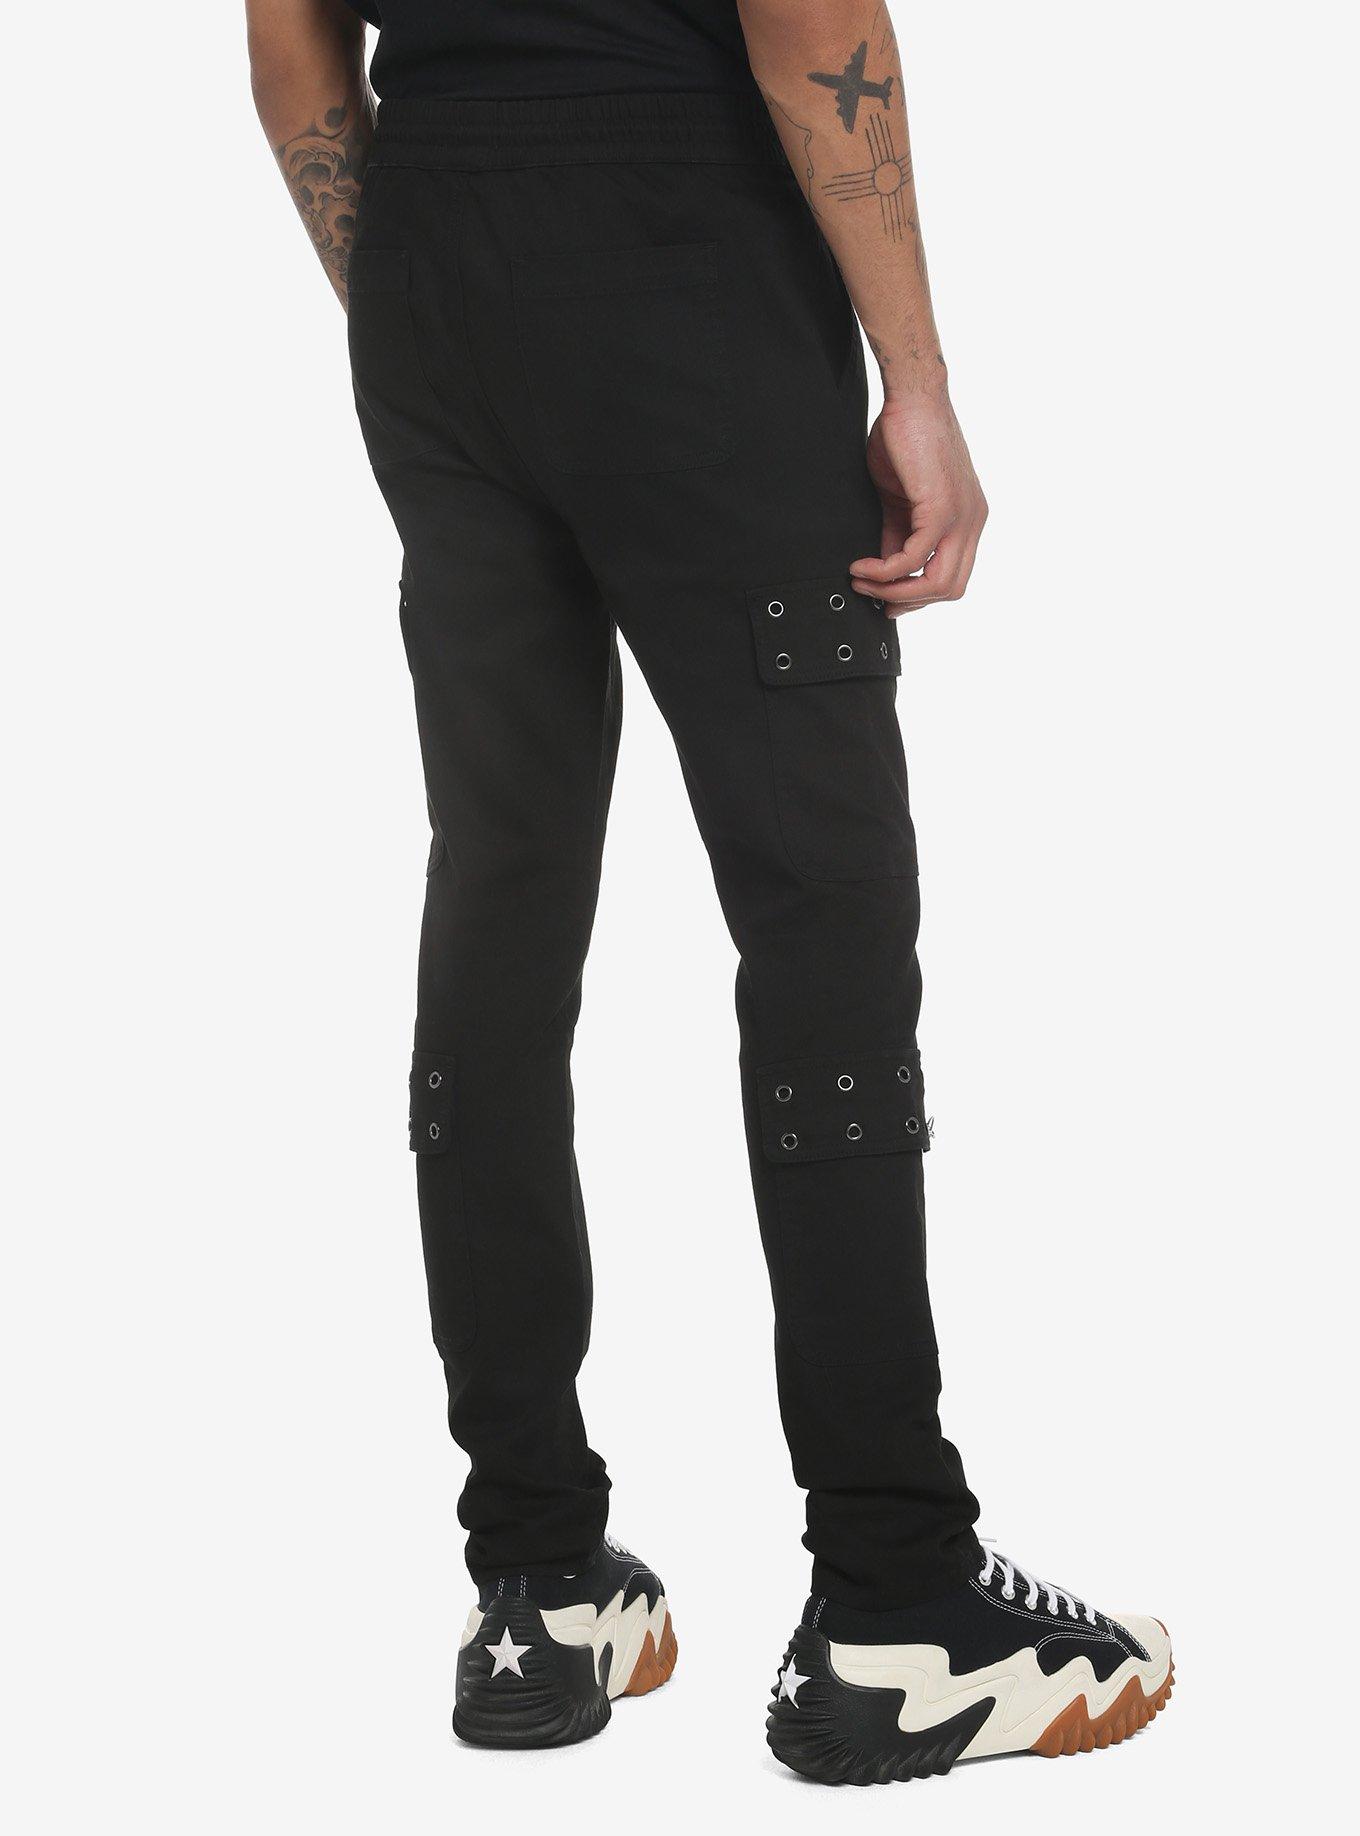 Black Grommet Pockets Skinny Jogger Pants, BLACK, alternate